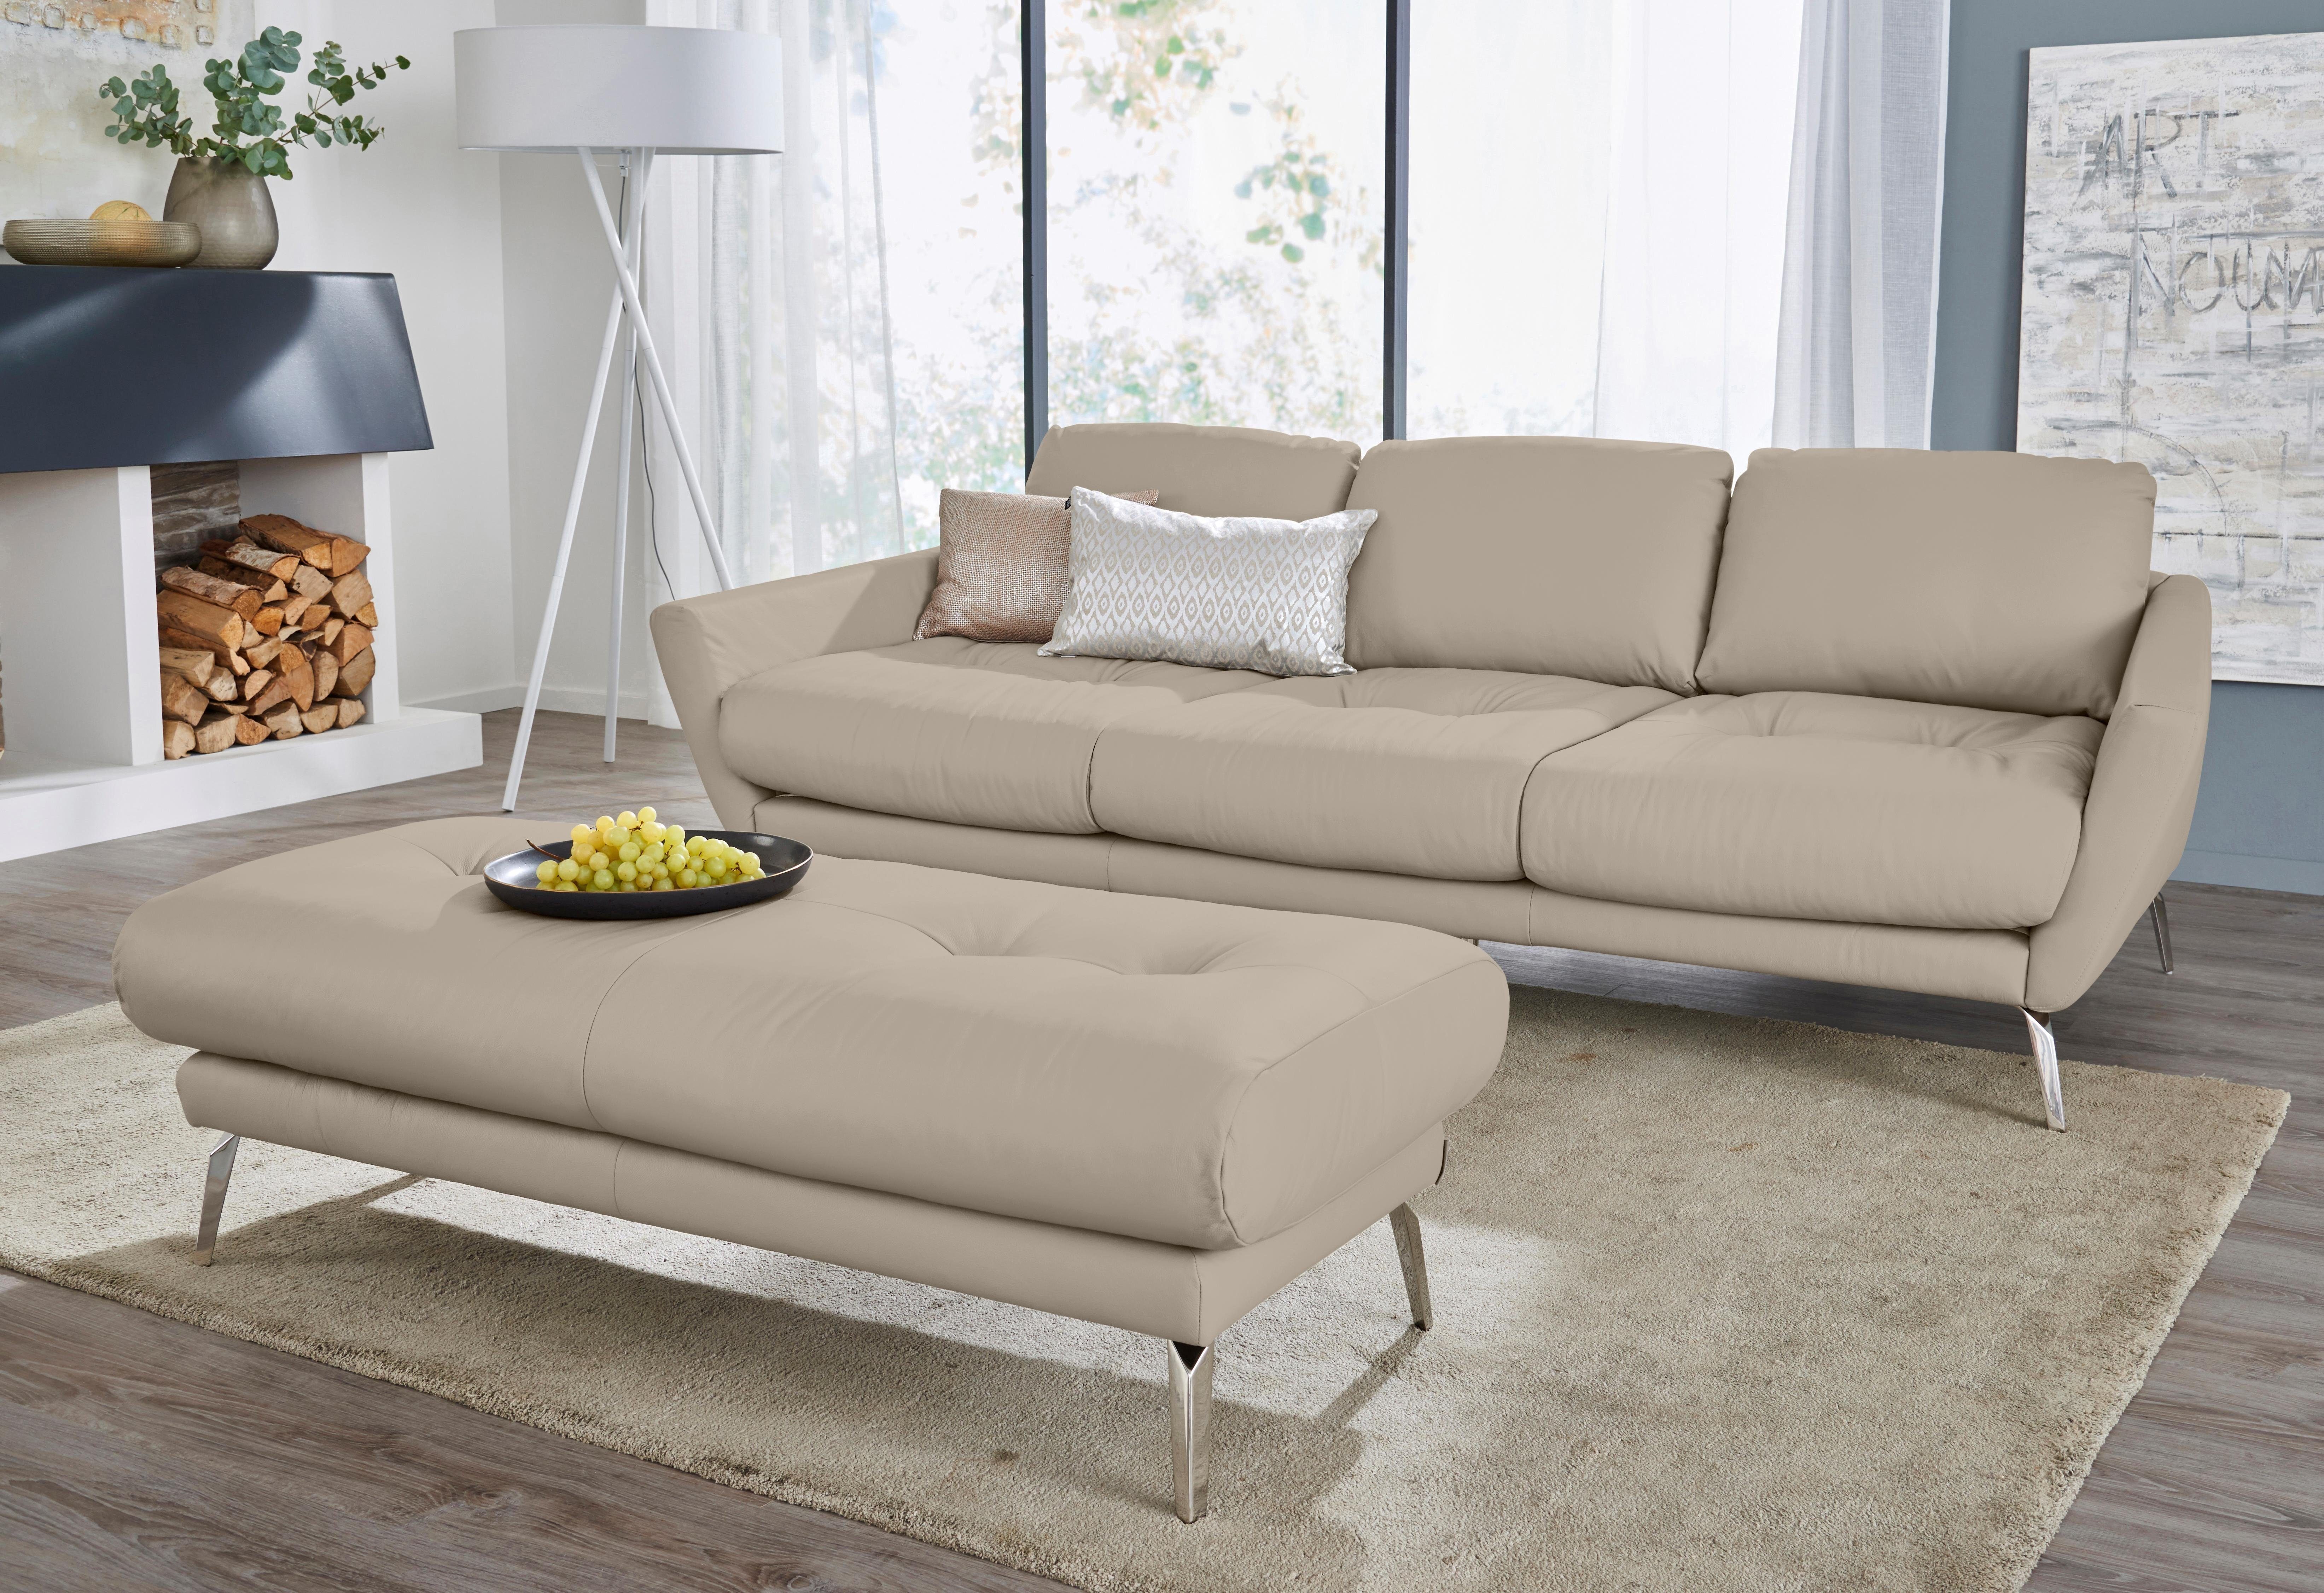 W.SCHILLIG Big-Sofa glänzend softy, Sitz, Heftung dekorativer im Chrom mit Füße